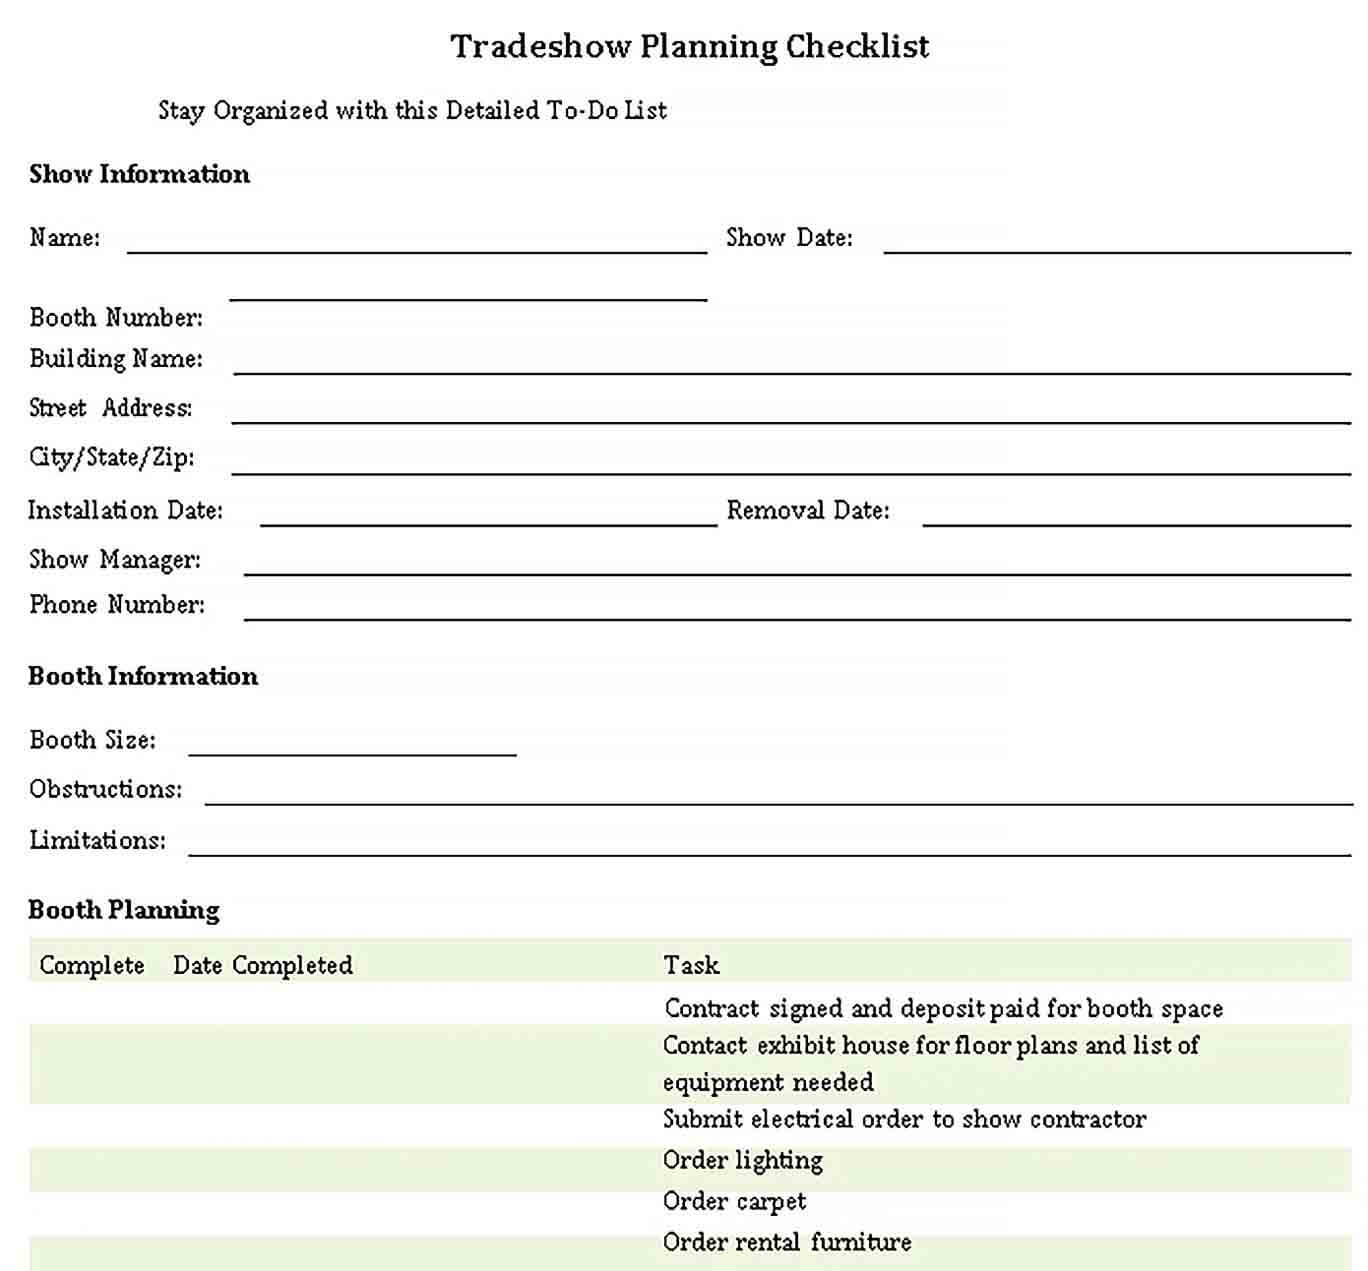 Sample Basic Trade Show Planning Checklist